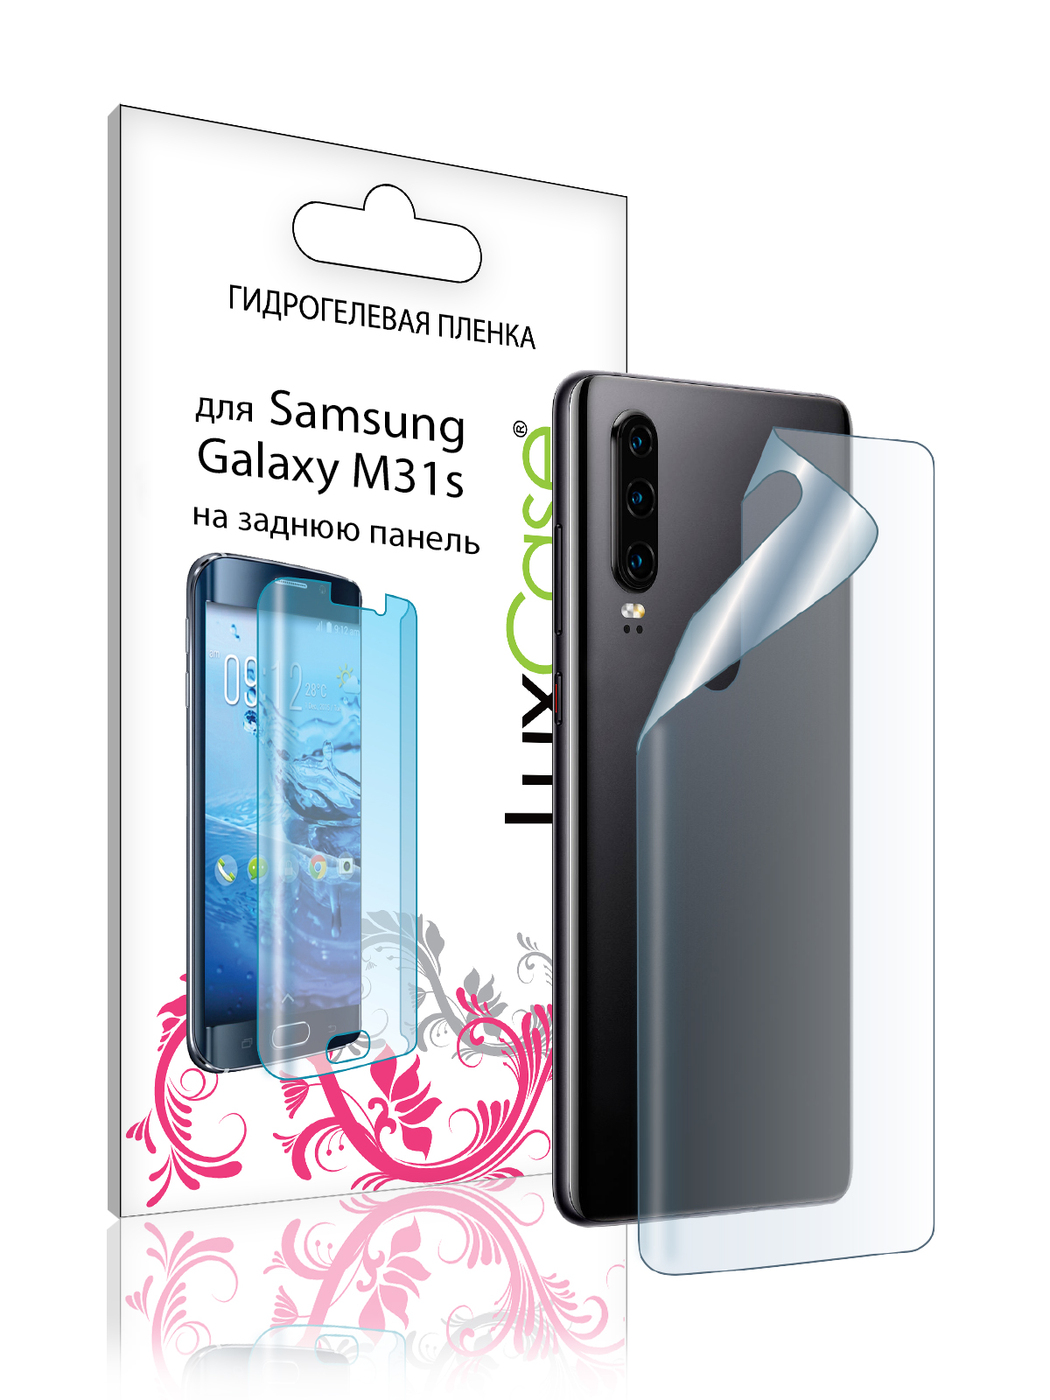 Пленка на заднюю панель LuxCase для Samsung Galaxy A31s 0.14mm Transparent 86193 пленка на заднюю панель luxcase для samsung galaxy f62 0 14mm transparent 86178